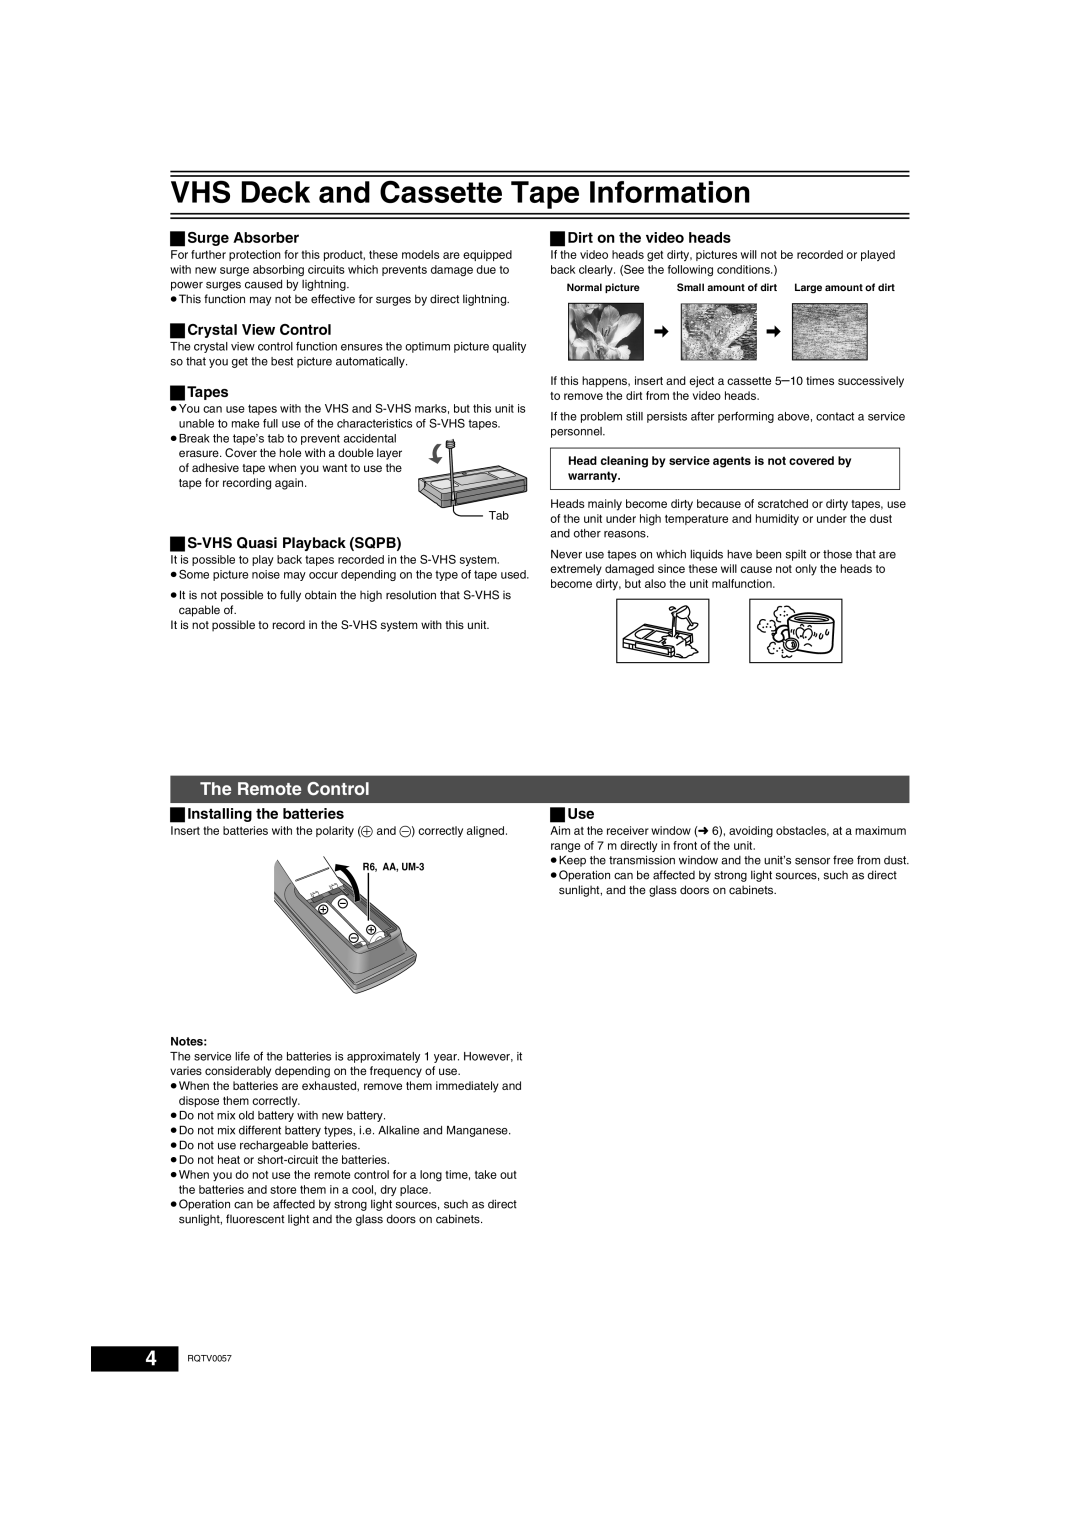 Panasonic NV-VP33 Series VHS Deck and Cassette Tape Information, The Remote Control, ª Surge Absorber, ª Tapes, ª Use 